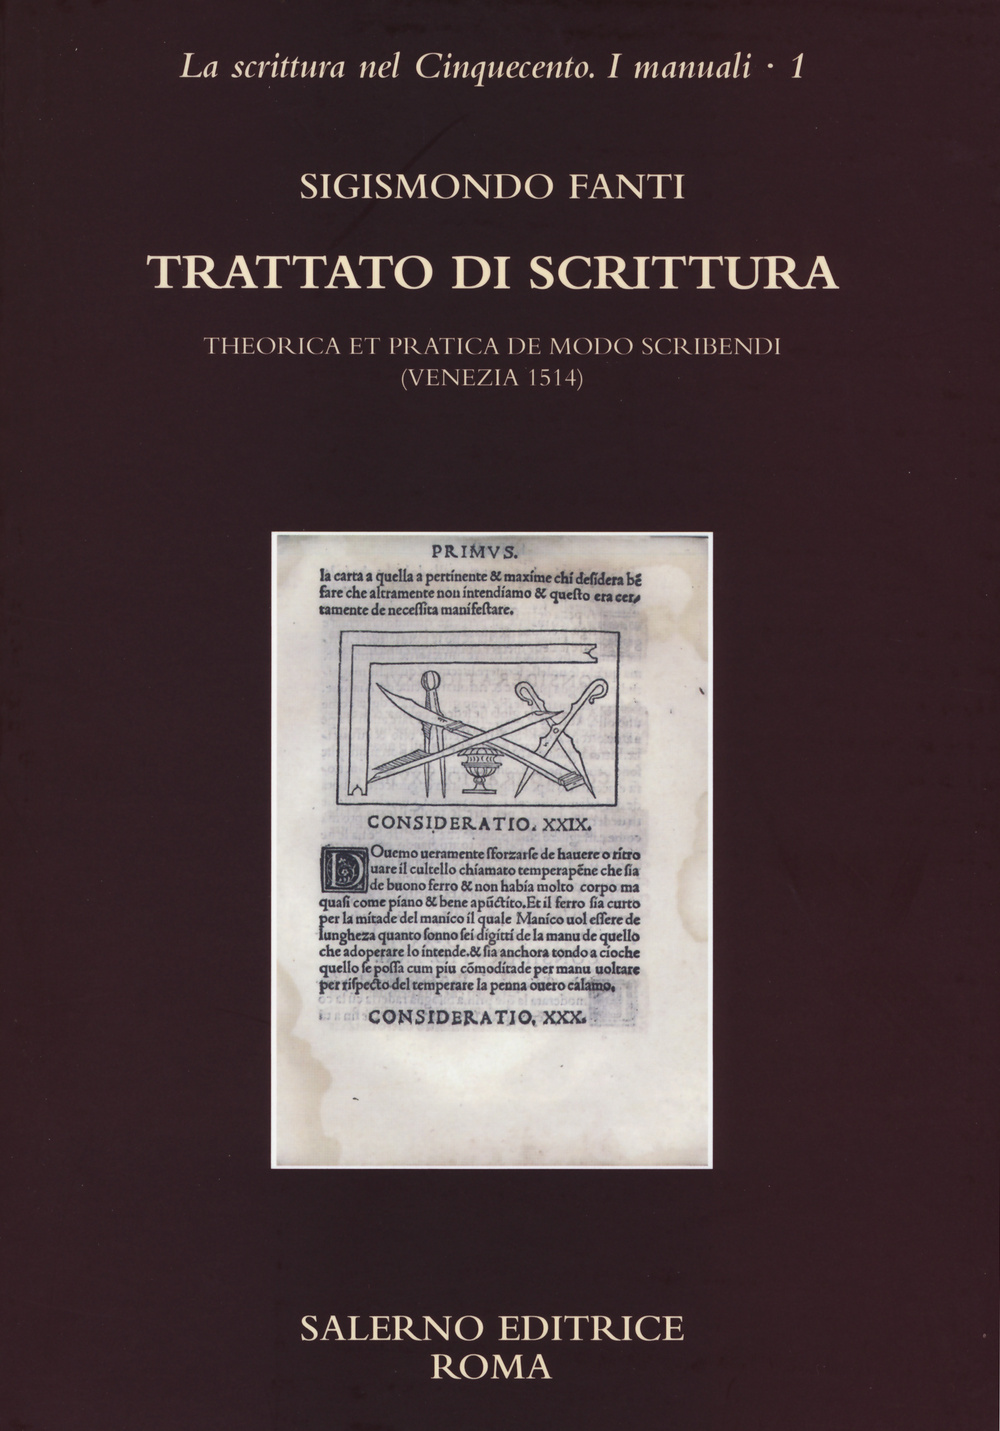 Trattato di scrittura. Theorica et pratica de modo scribendi (Venezia, 1514)